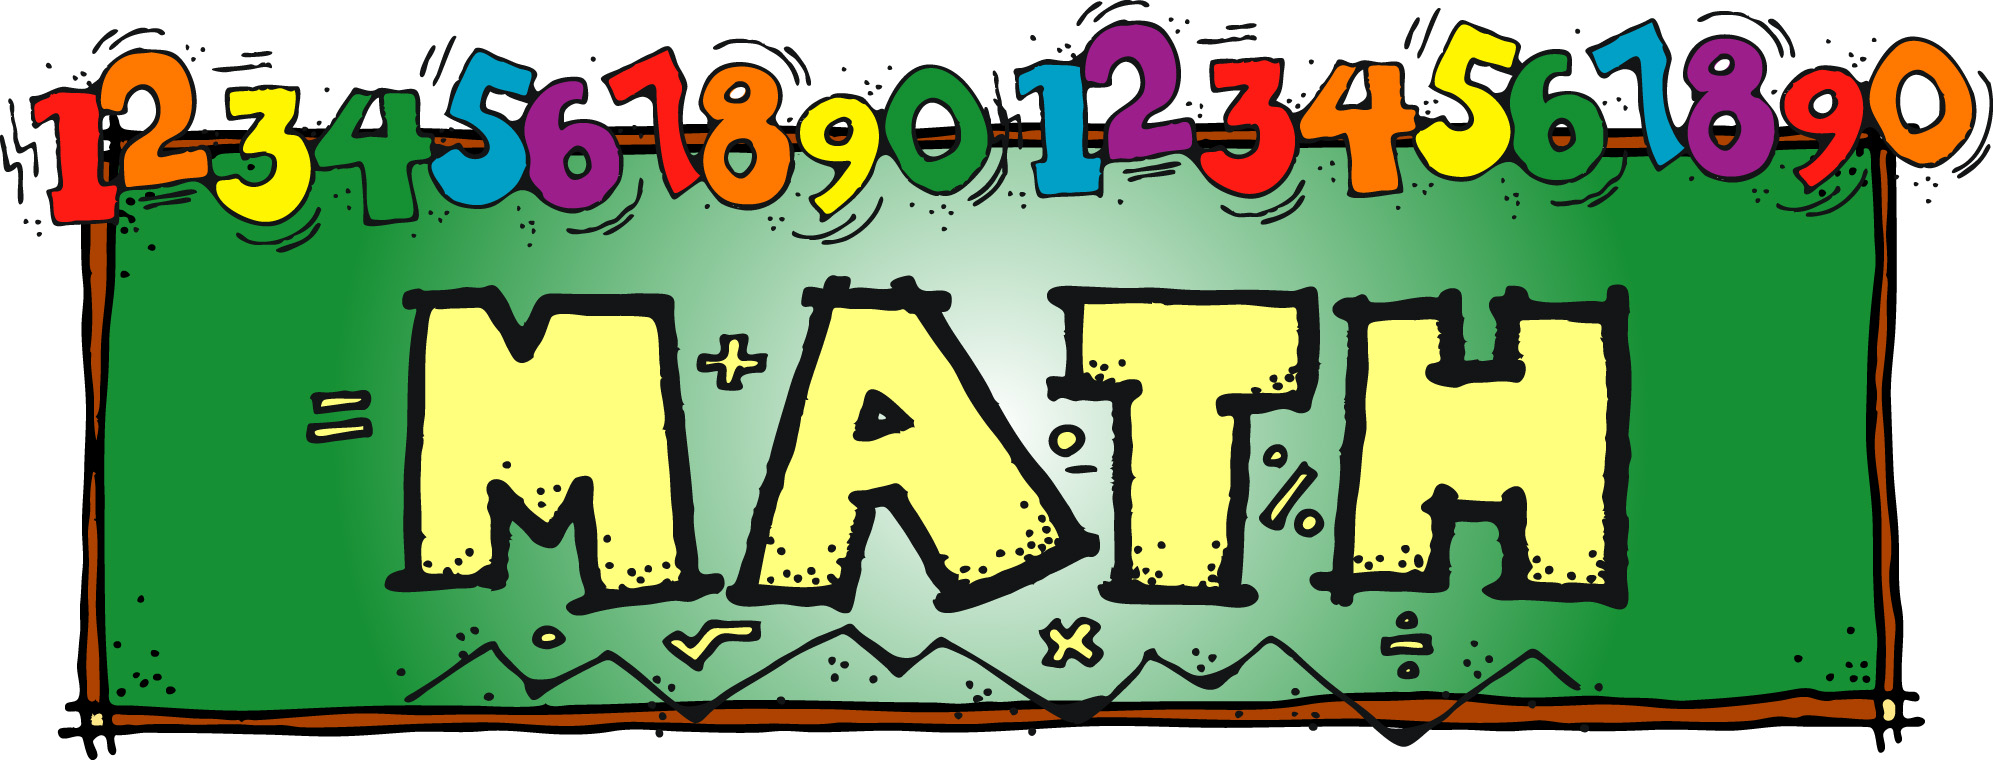 Free Math School Cliparts, Download Free Clip Art, Free Clip